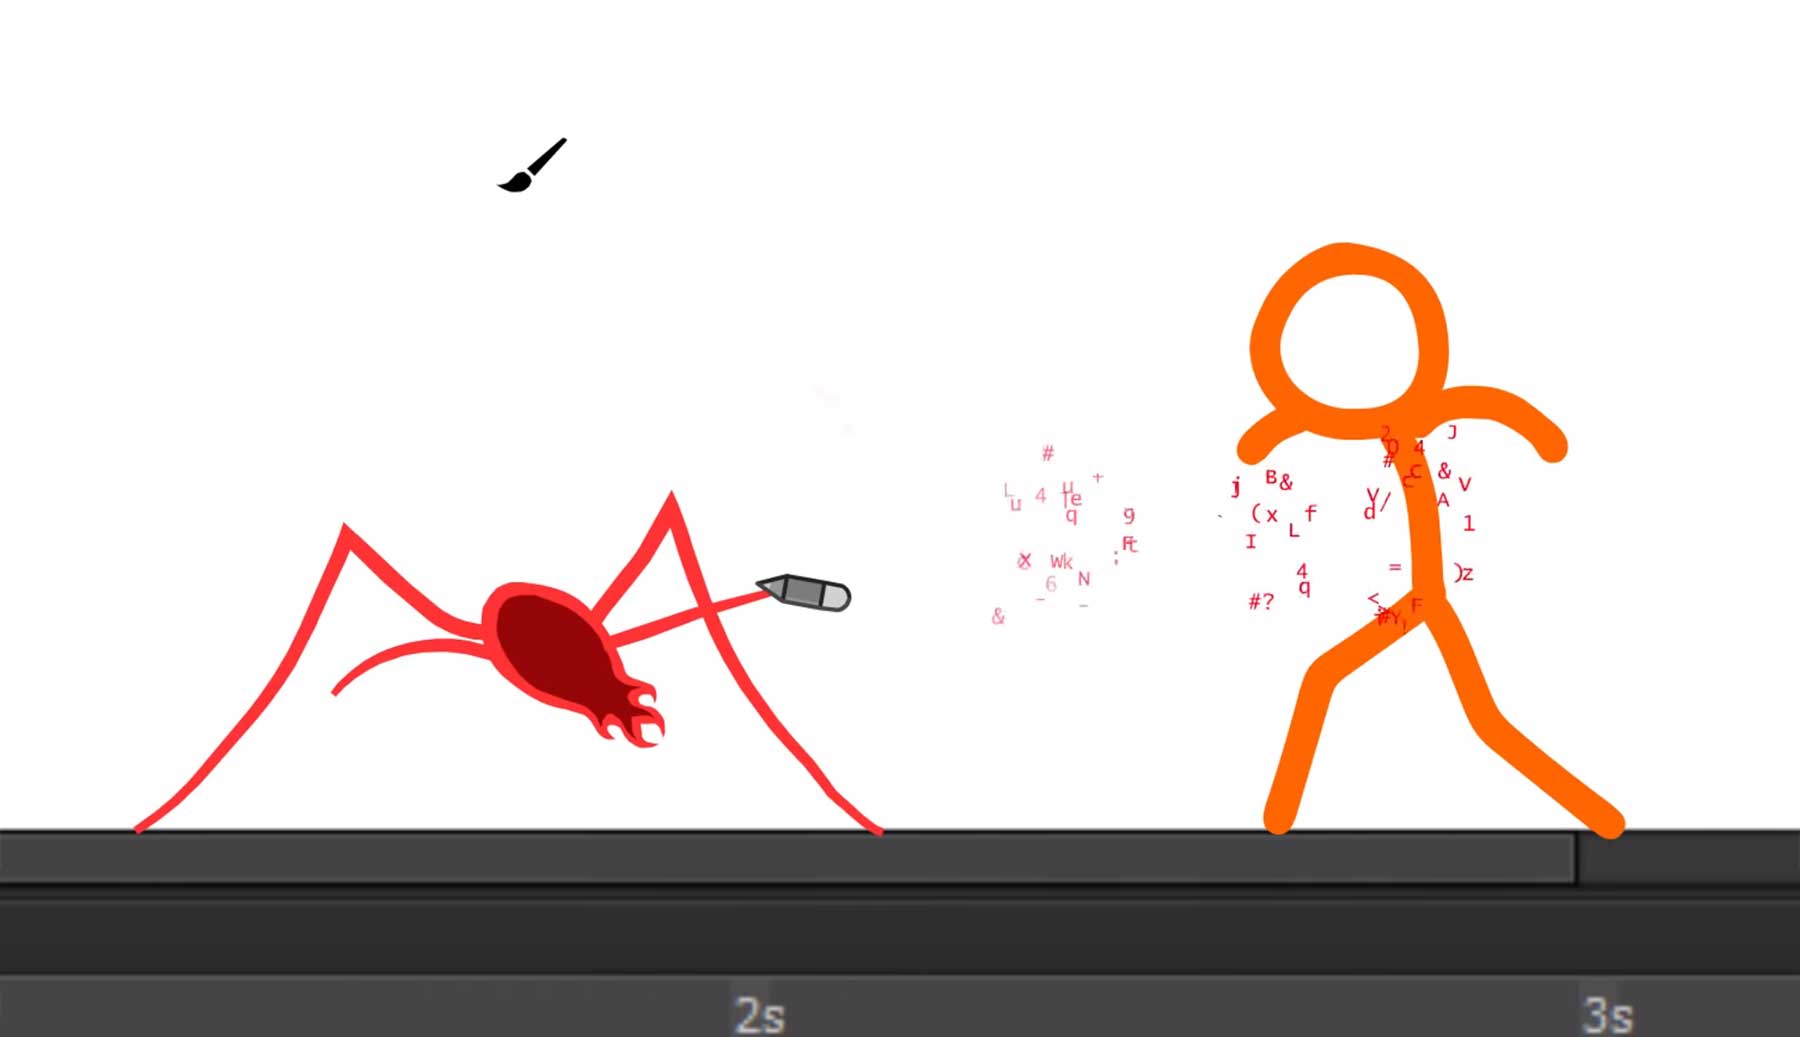 Animator vs. Animation: The Virus animator-vs-animation-short-the-virus 